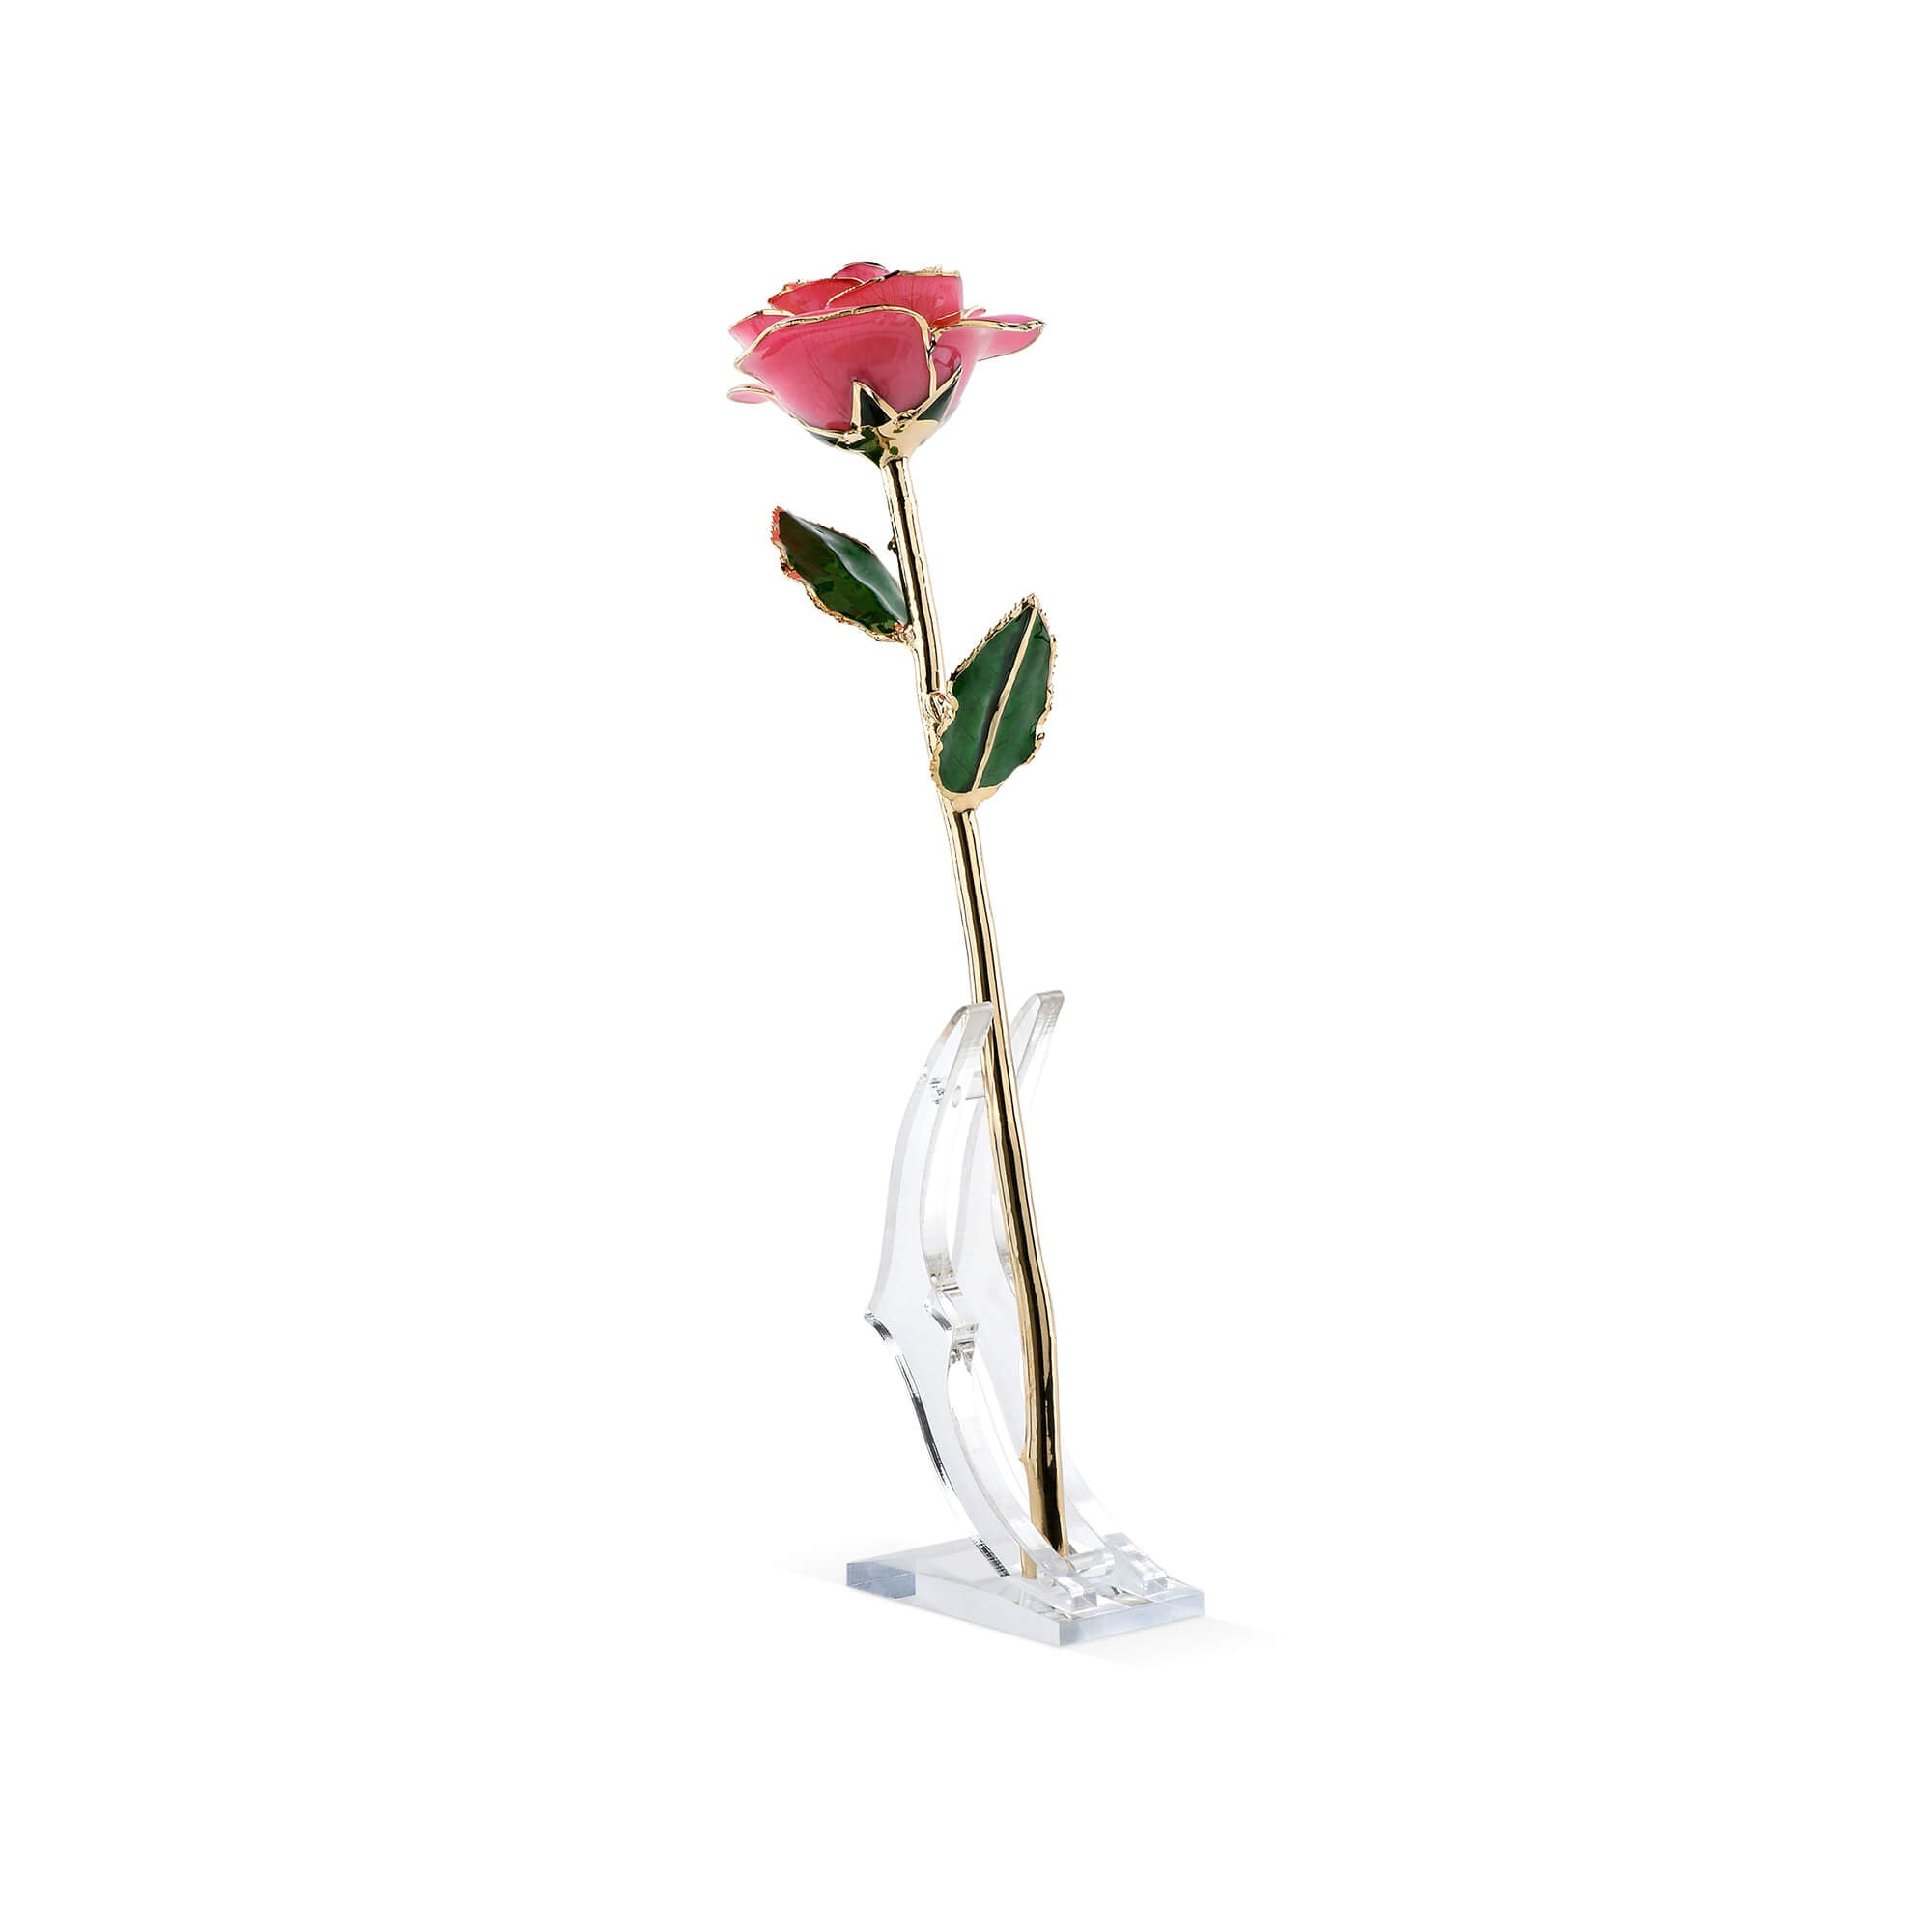 Timeless Rose (Rich Pink)